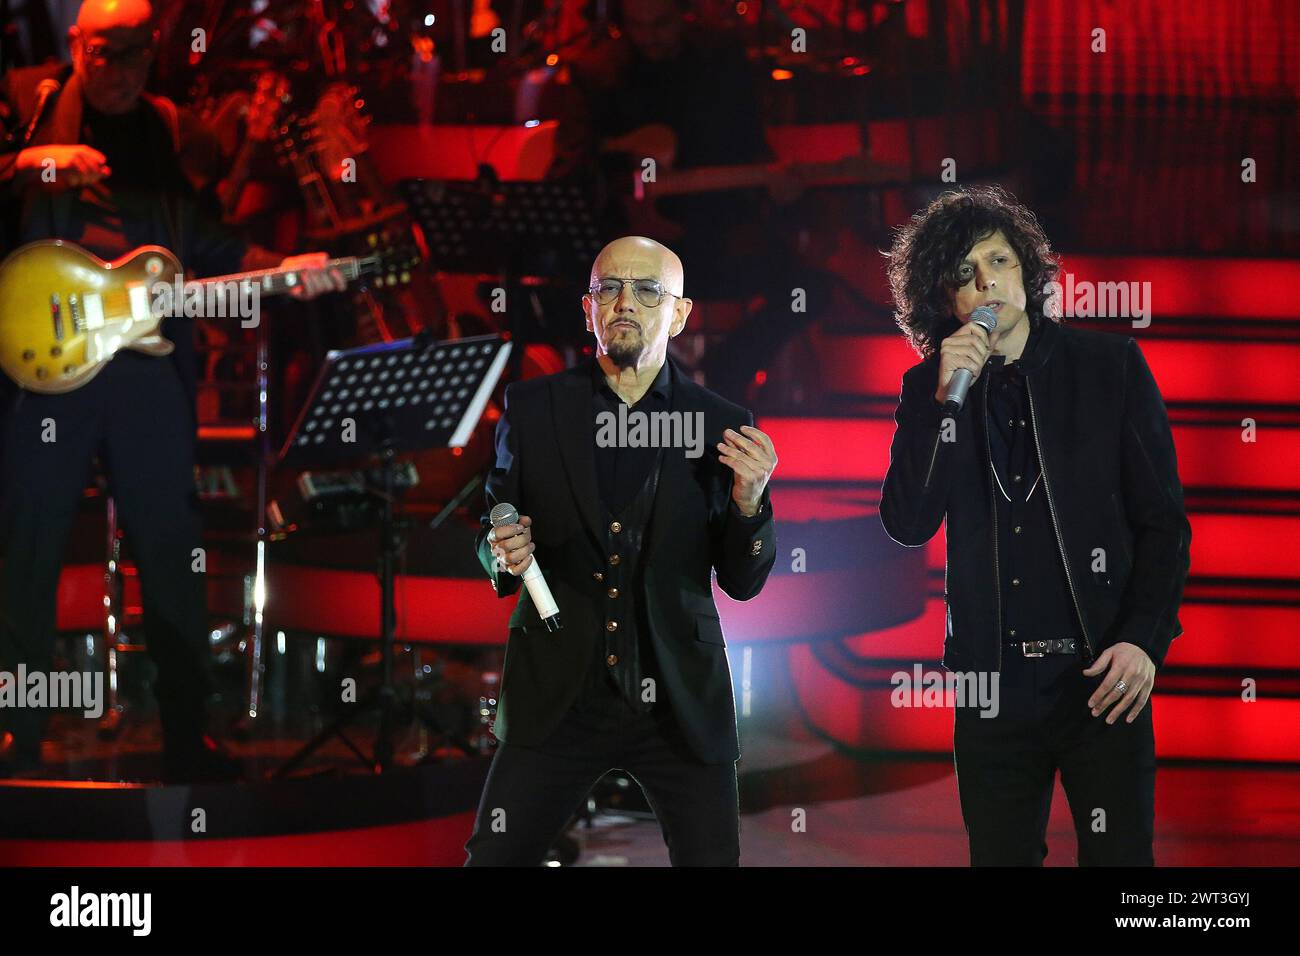 The singers Enrico Ruggeri and Ermal Meta during the TV show Una Storia Da Cantare, in the Rai auditorium in Naples. Stock Photo